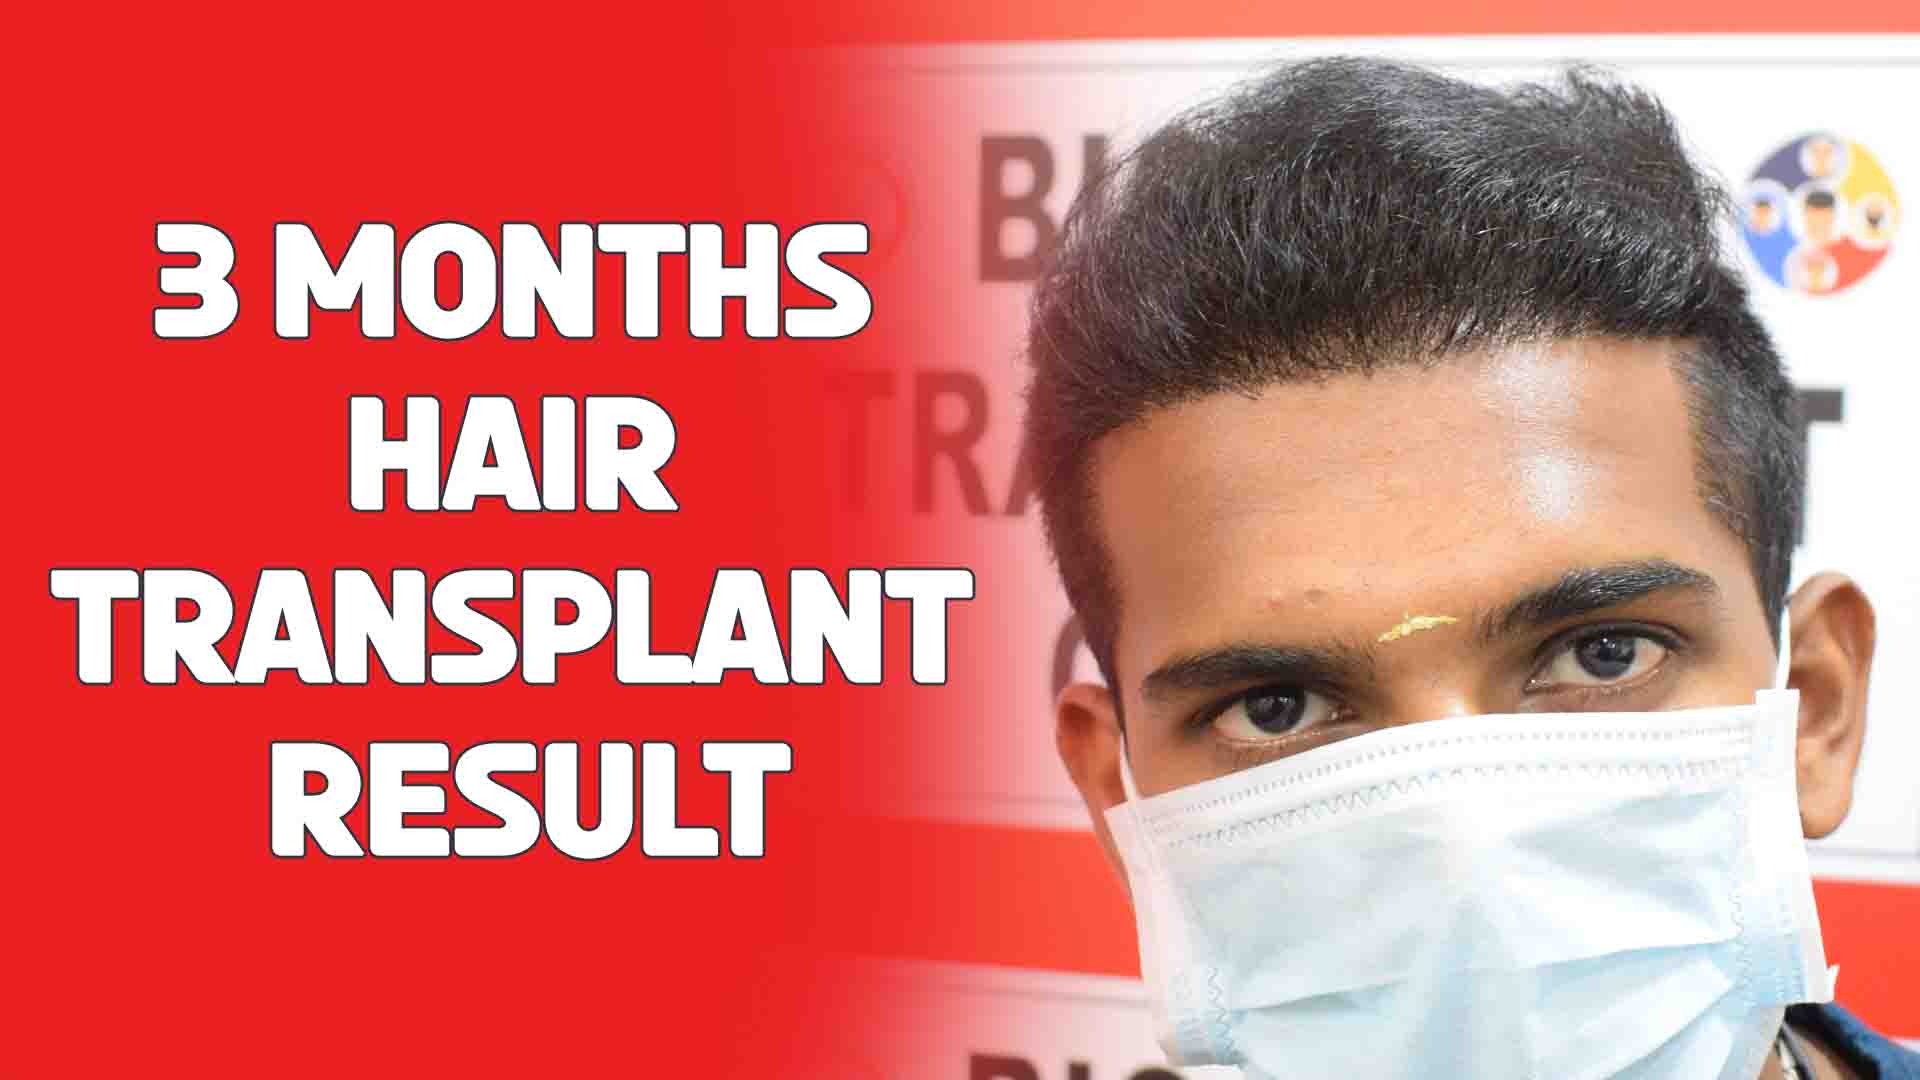 3 months hair transplant result